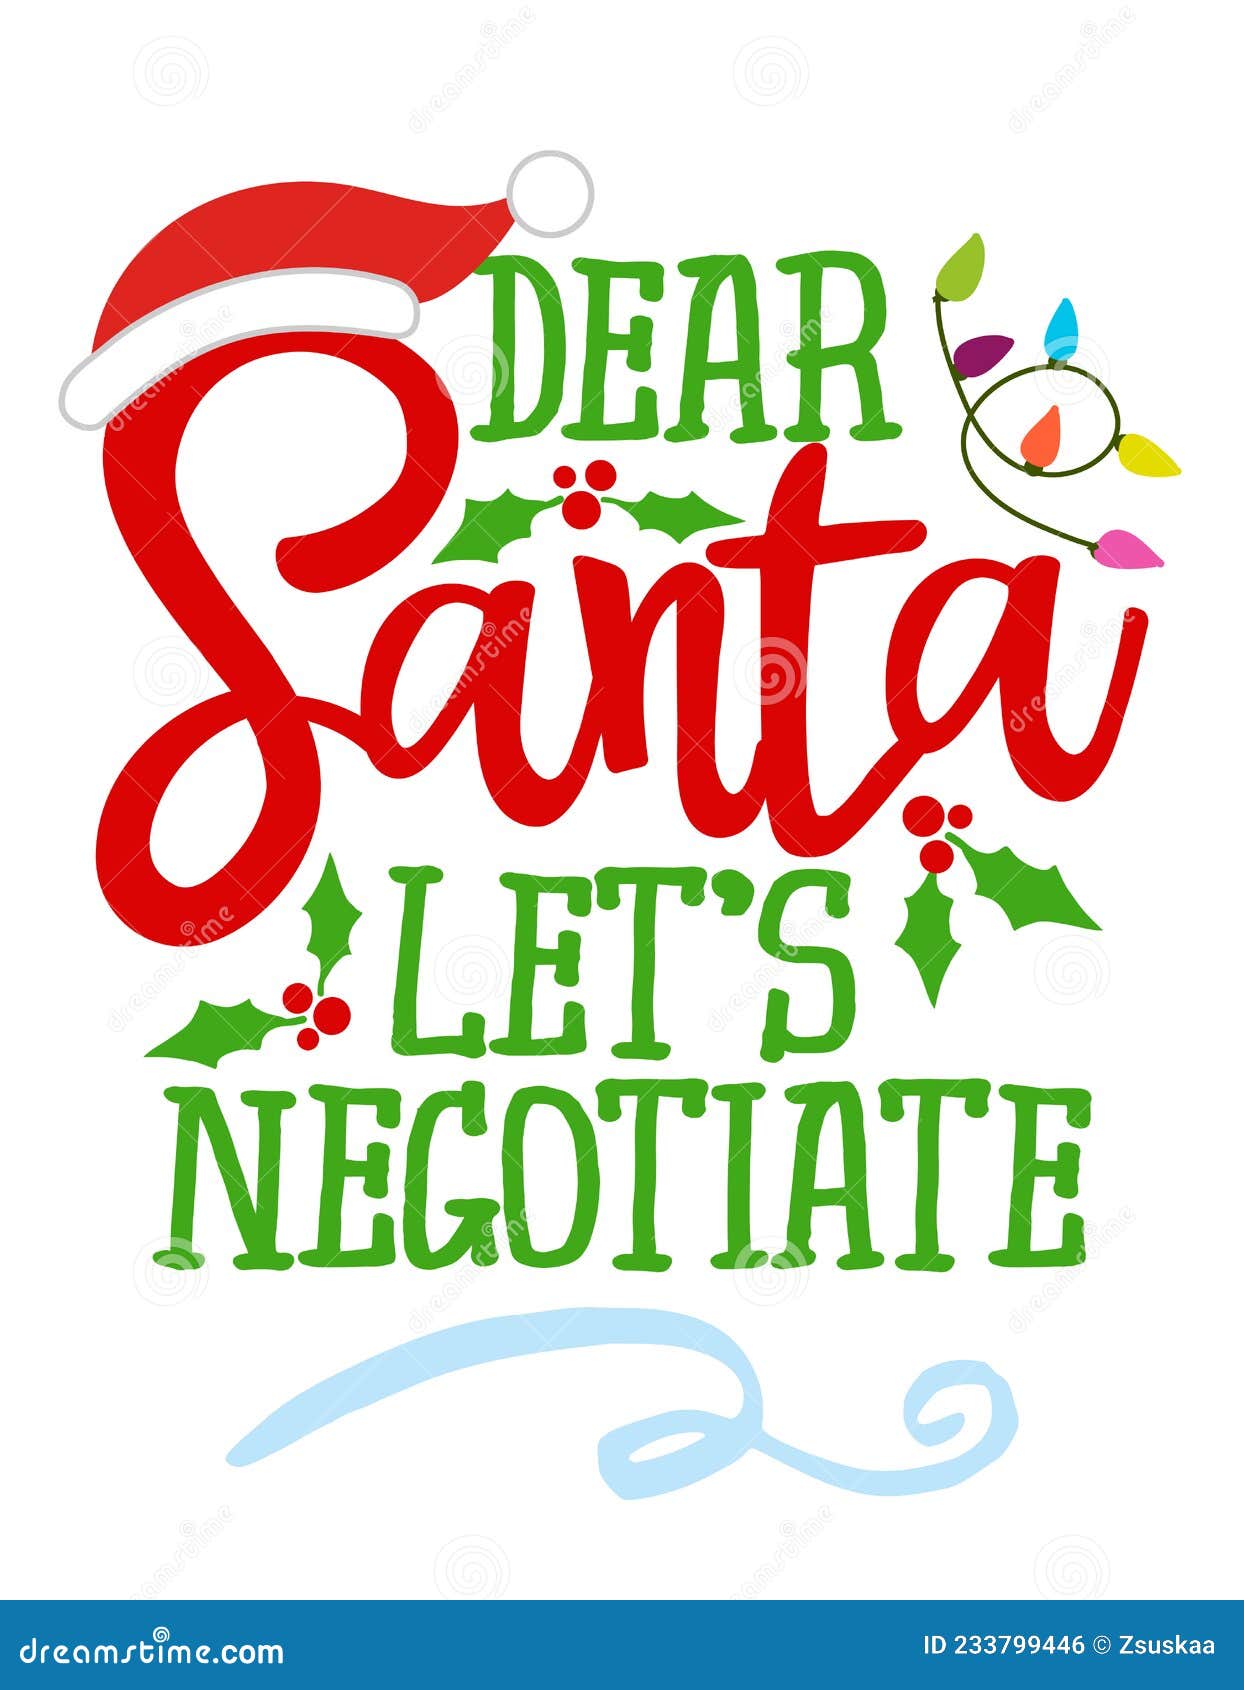 dear santa, let`s negotiate - calligraphy phrase for christmas.